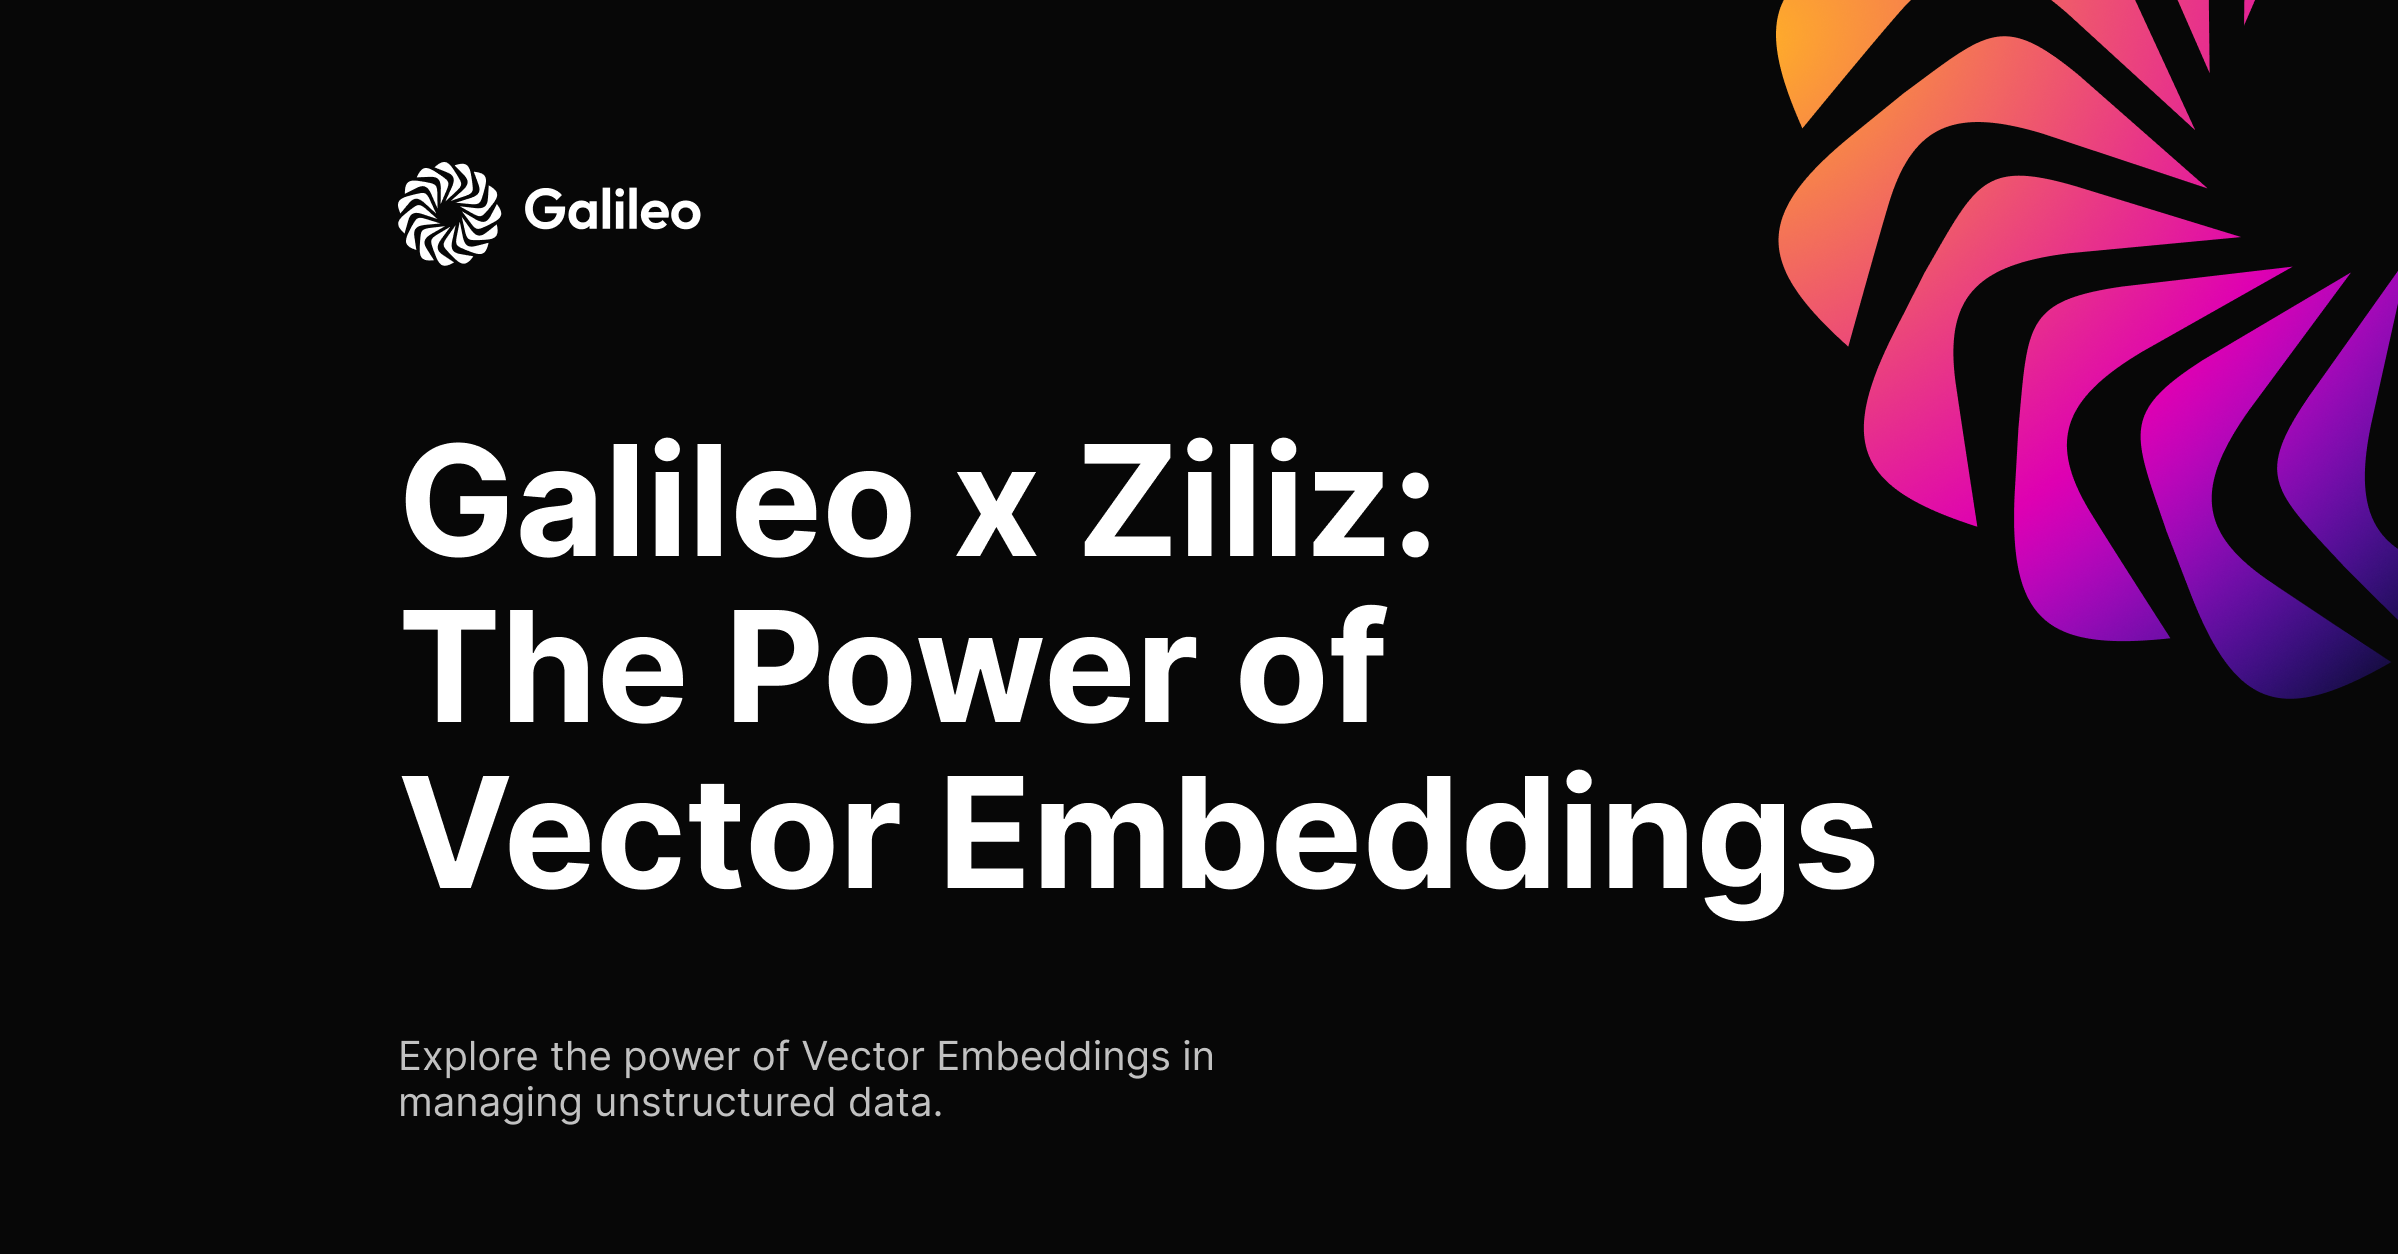 Galileo x Zilliz: The Power of Vector Embeddings